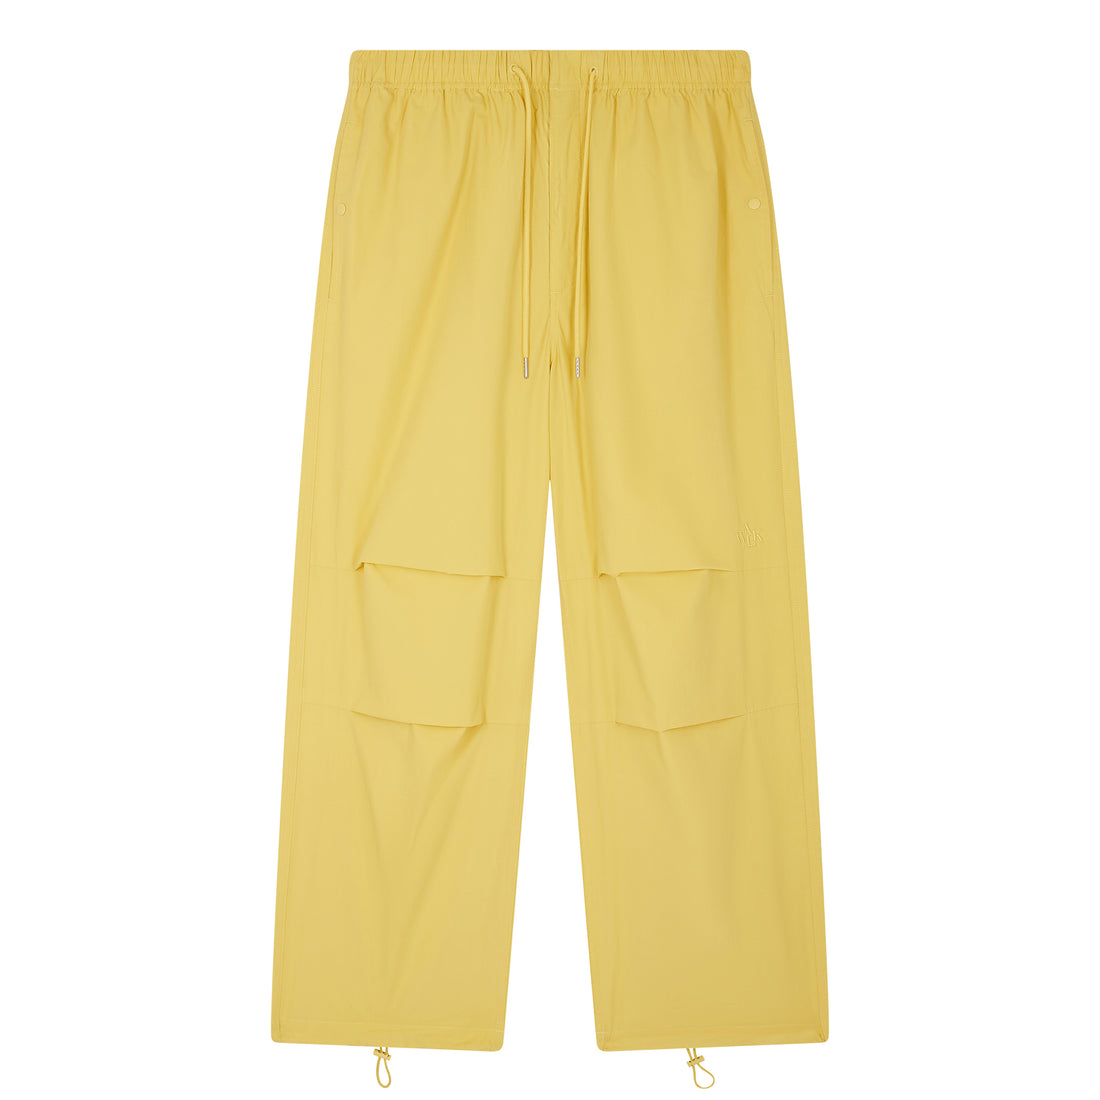 The yellow parachute pants